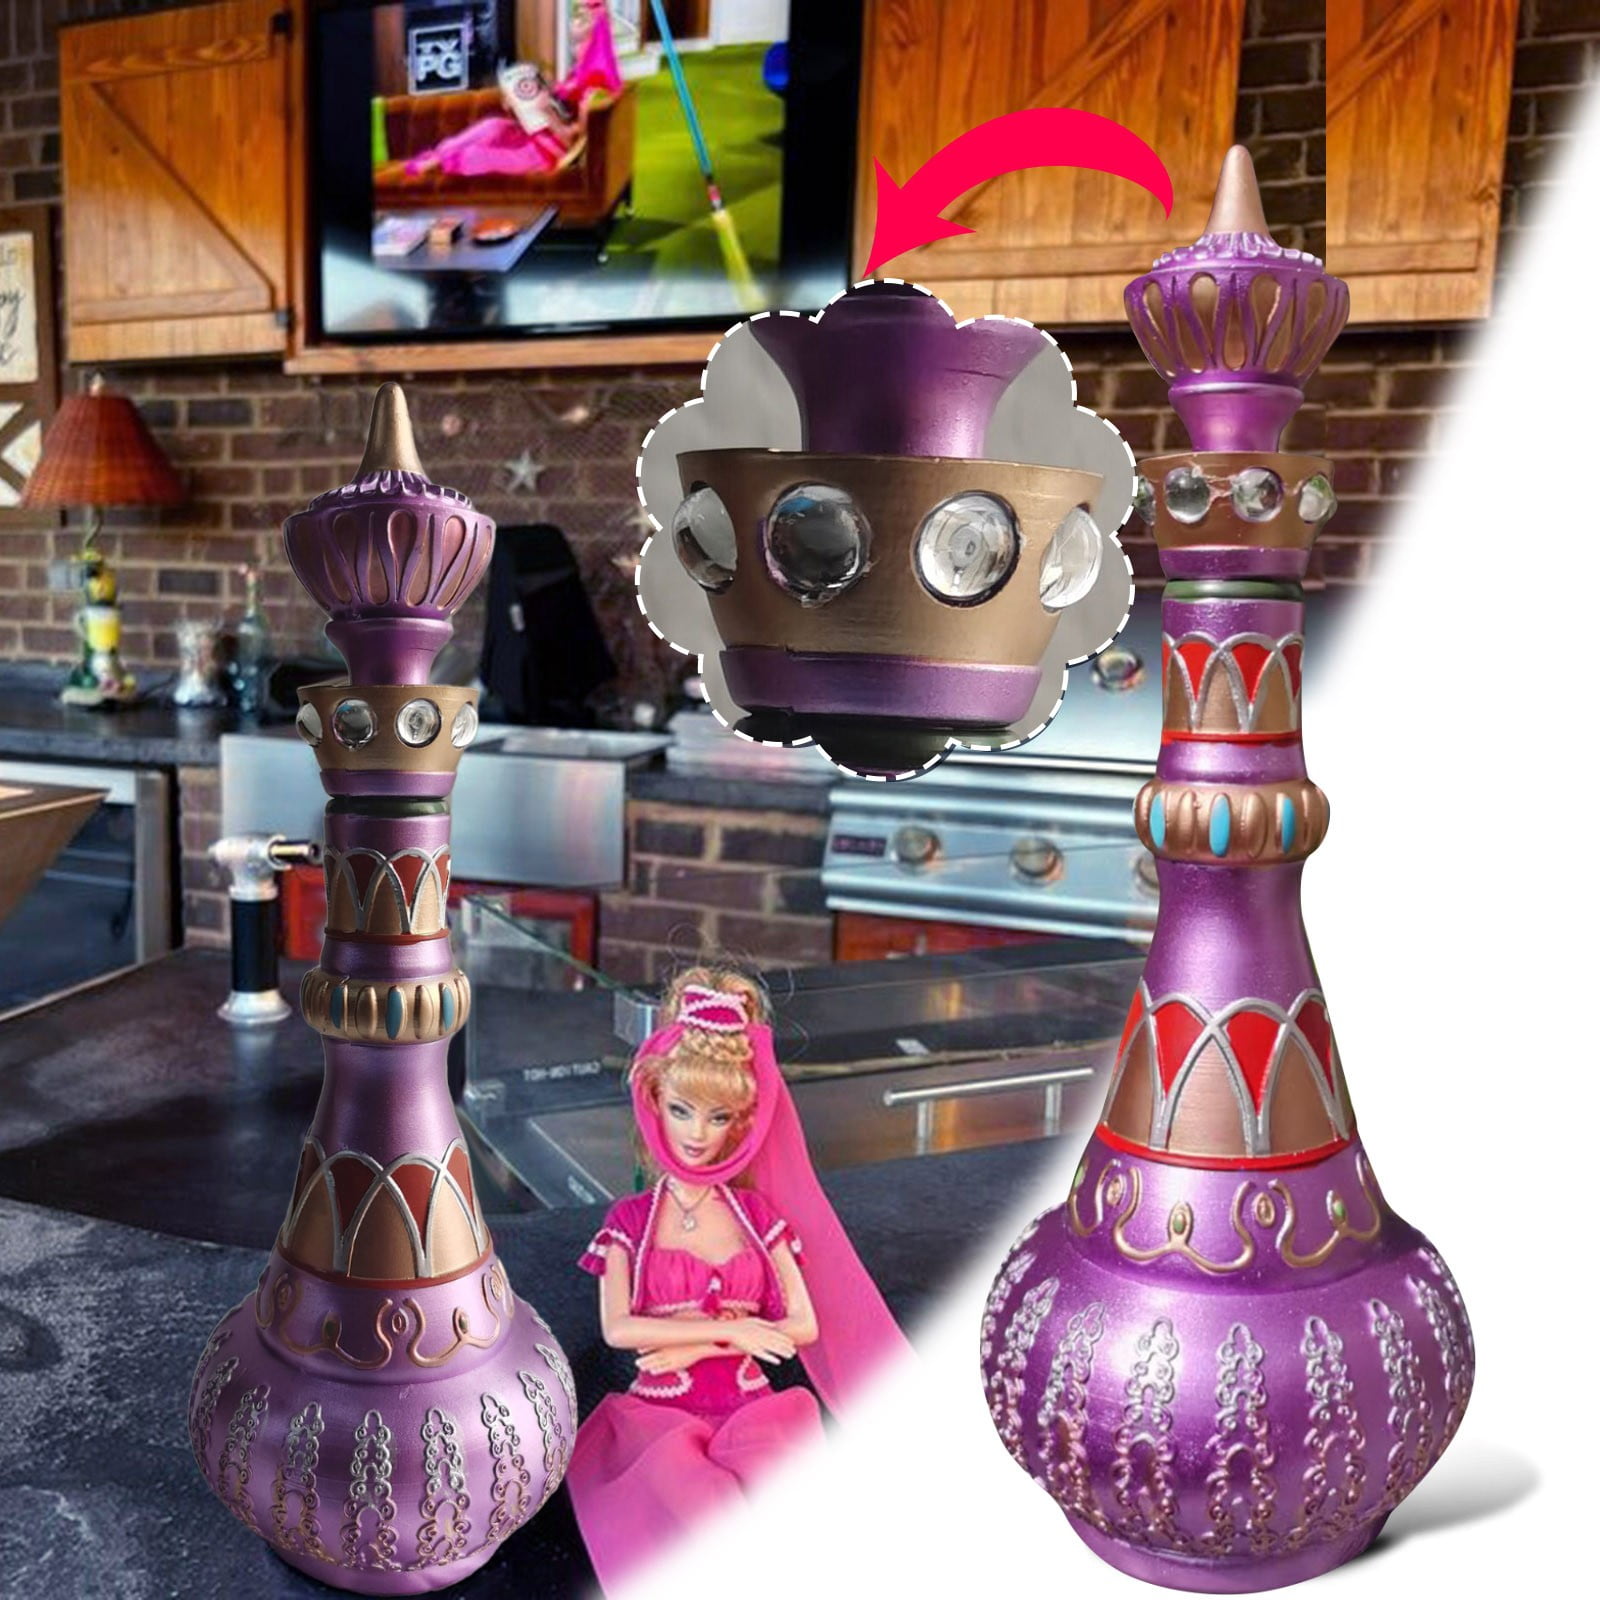 EKOUSN Black and Friday Deals I Dream Of Jeannie Bottle From Mario-Della  Casa-Second Season Glass MIRRORED Purple Bottle!Pagoda Spirit Bottle  Decoration 